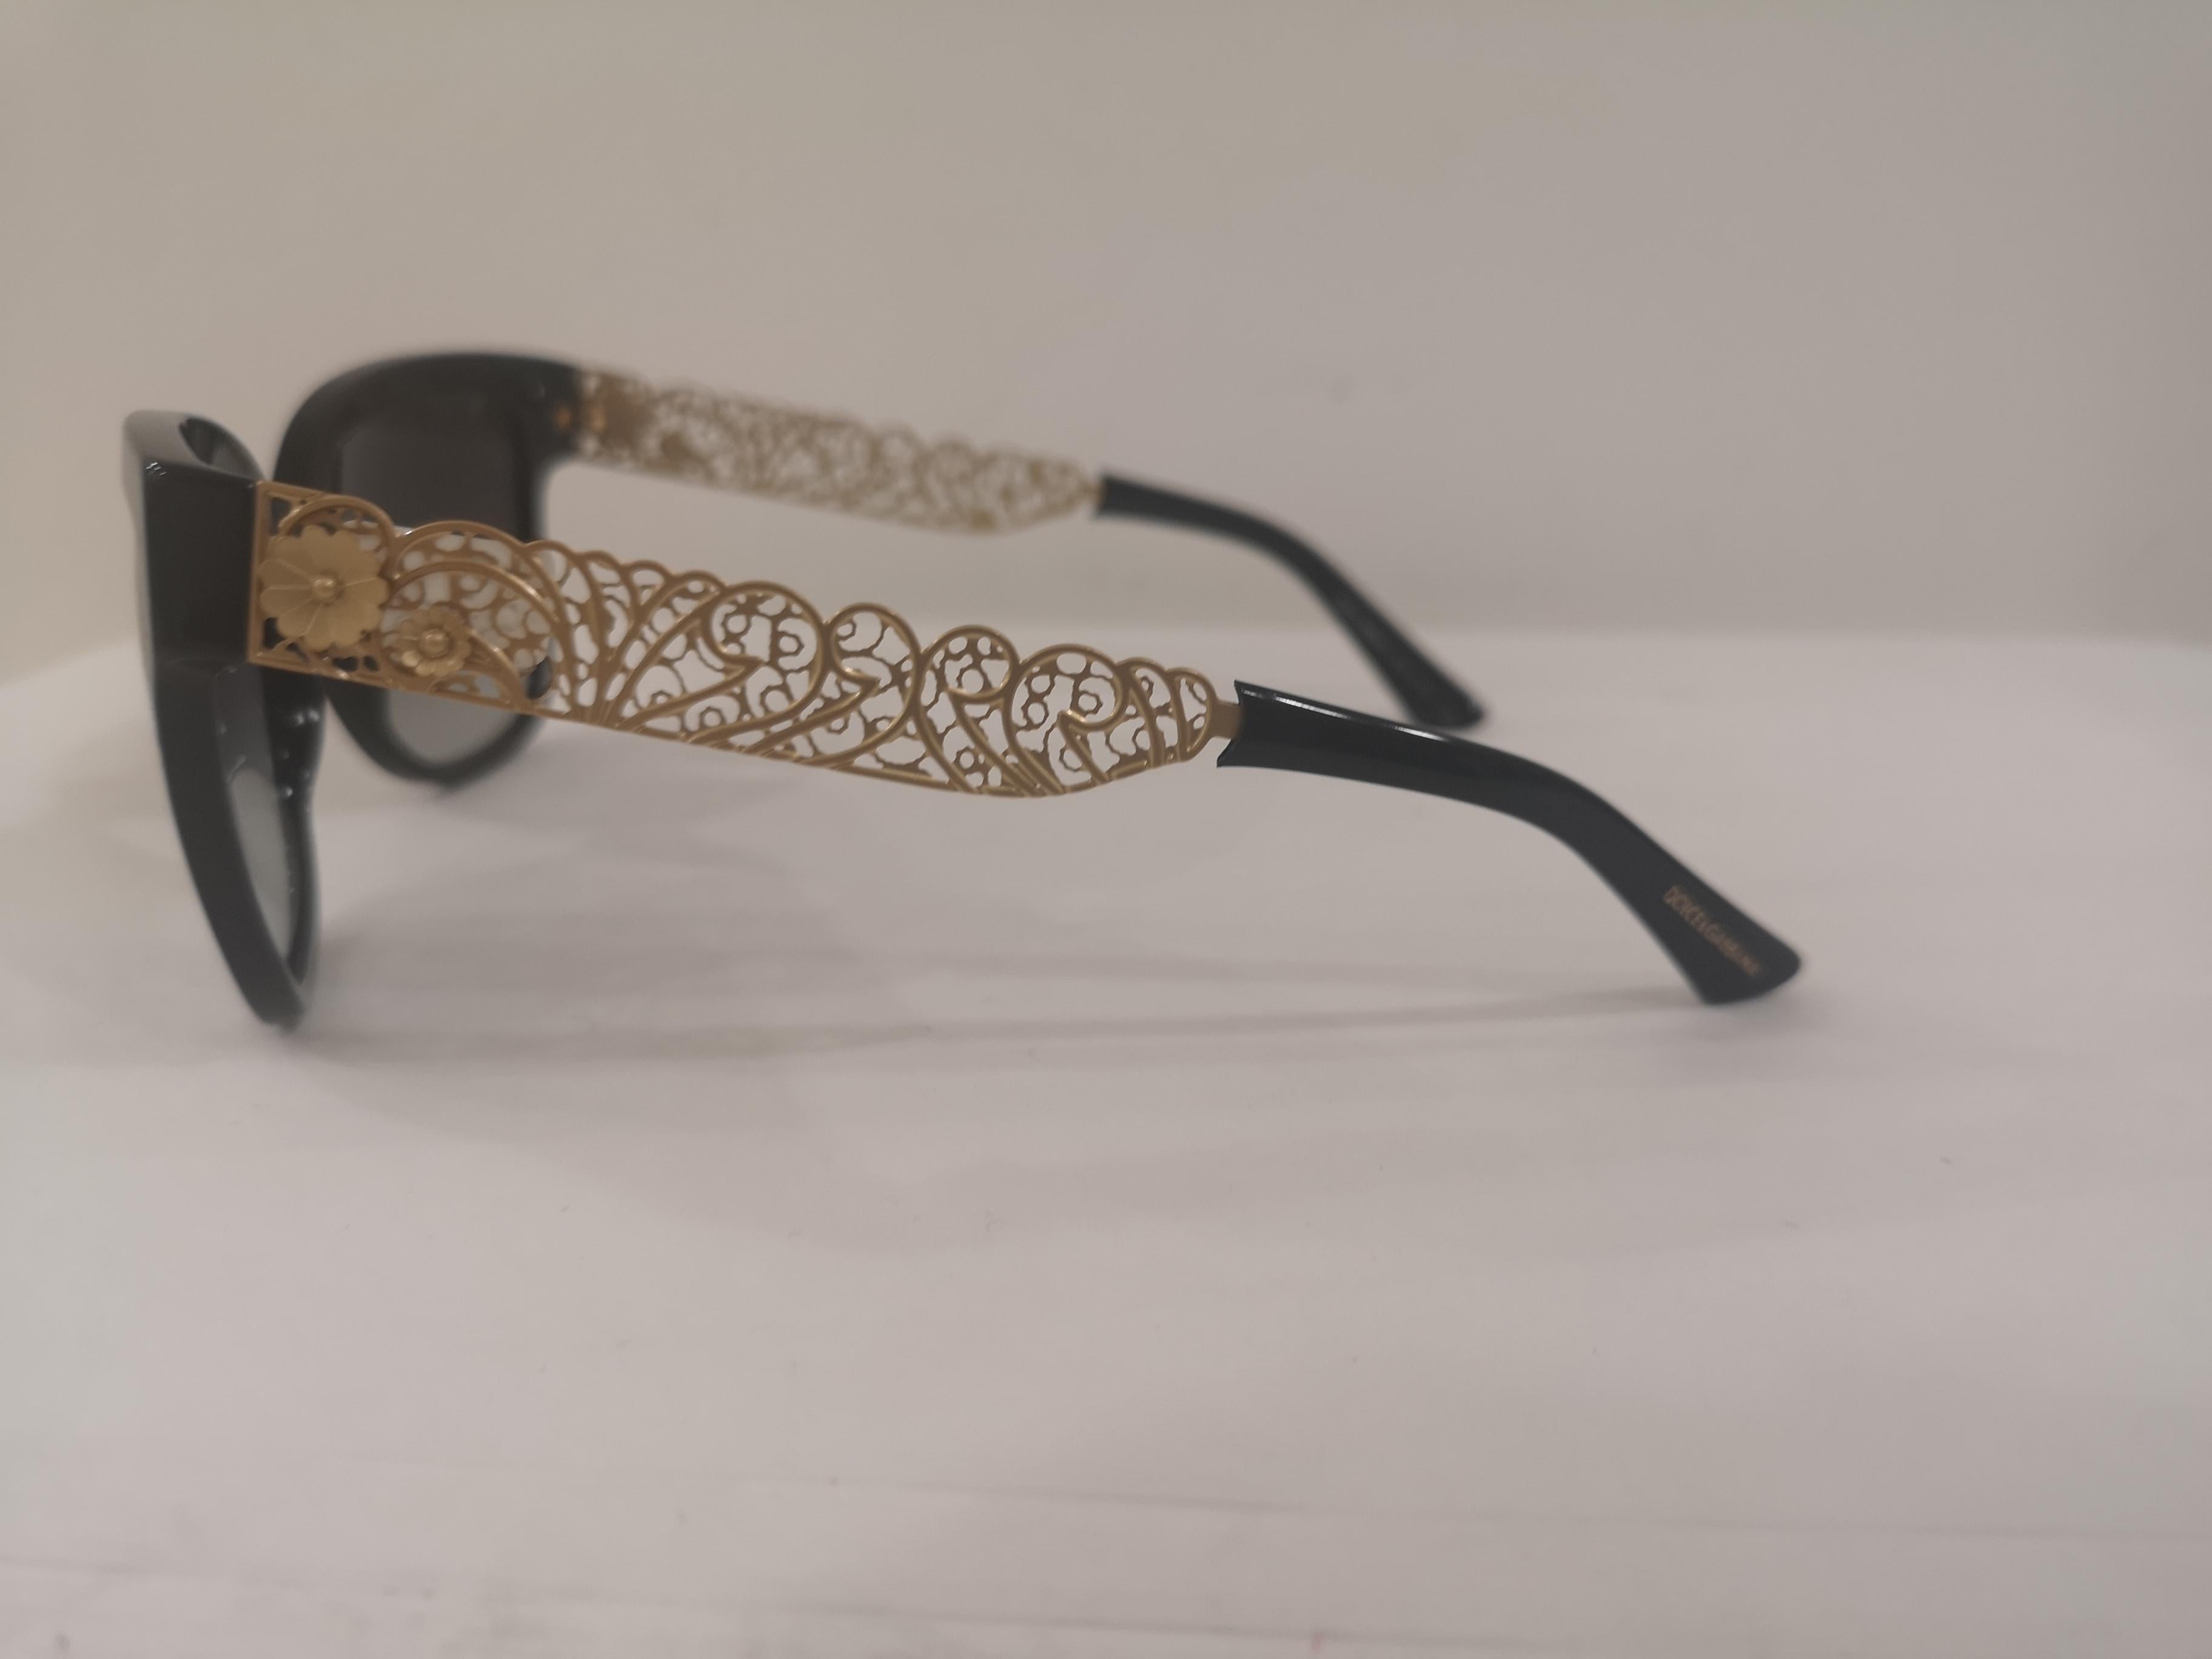 Dolce & Gabbana black gold sunglasses NWOT
Black sunglasses gold handmade stem
totally made in italy
still with box